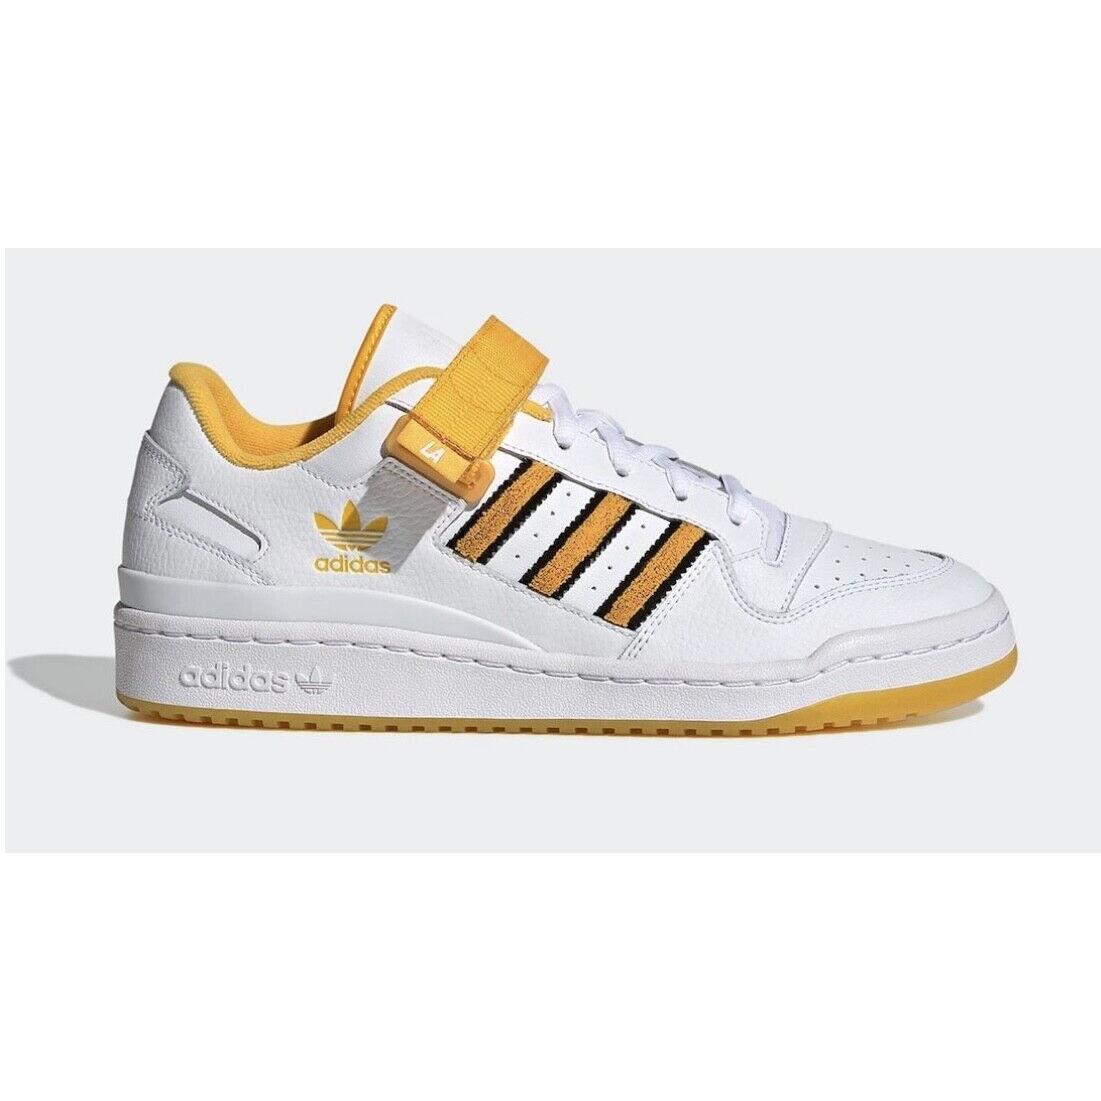 Adidas Forum Low City LA Mens Casual Retro Shoe White Yellow Trainer Sneaker